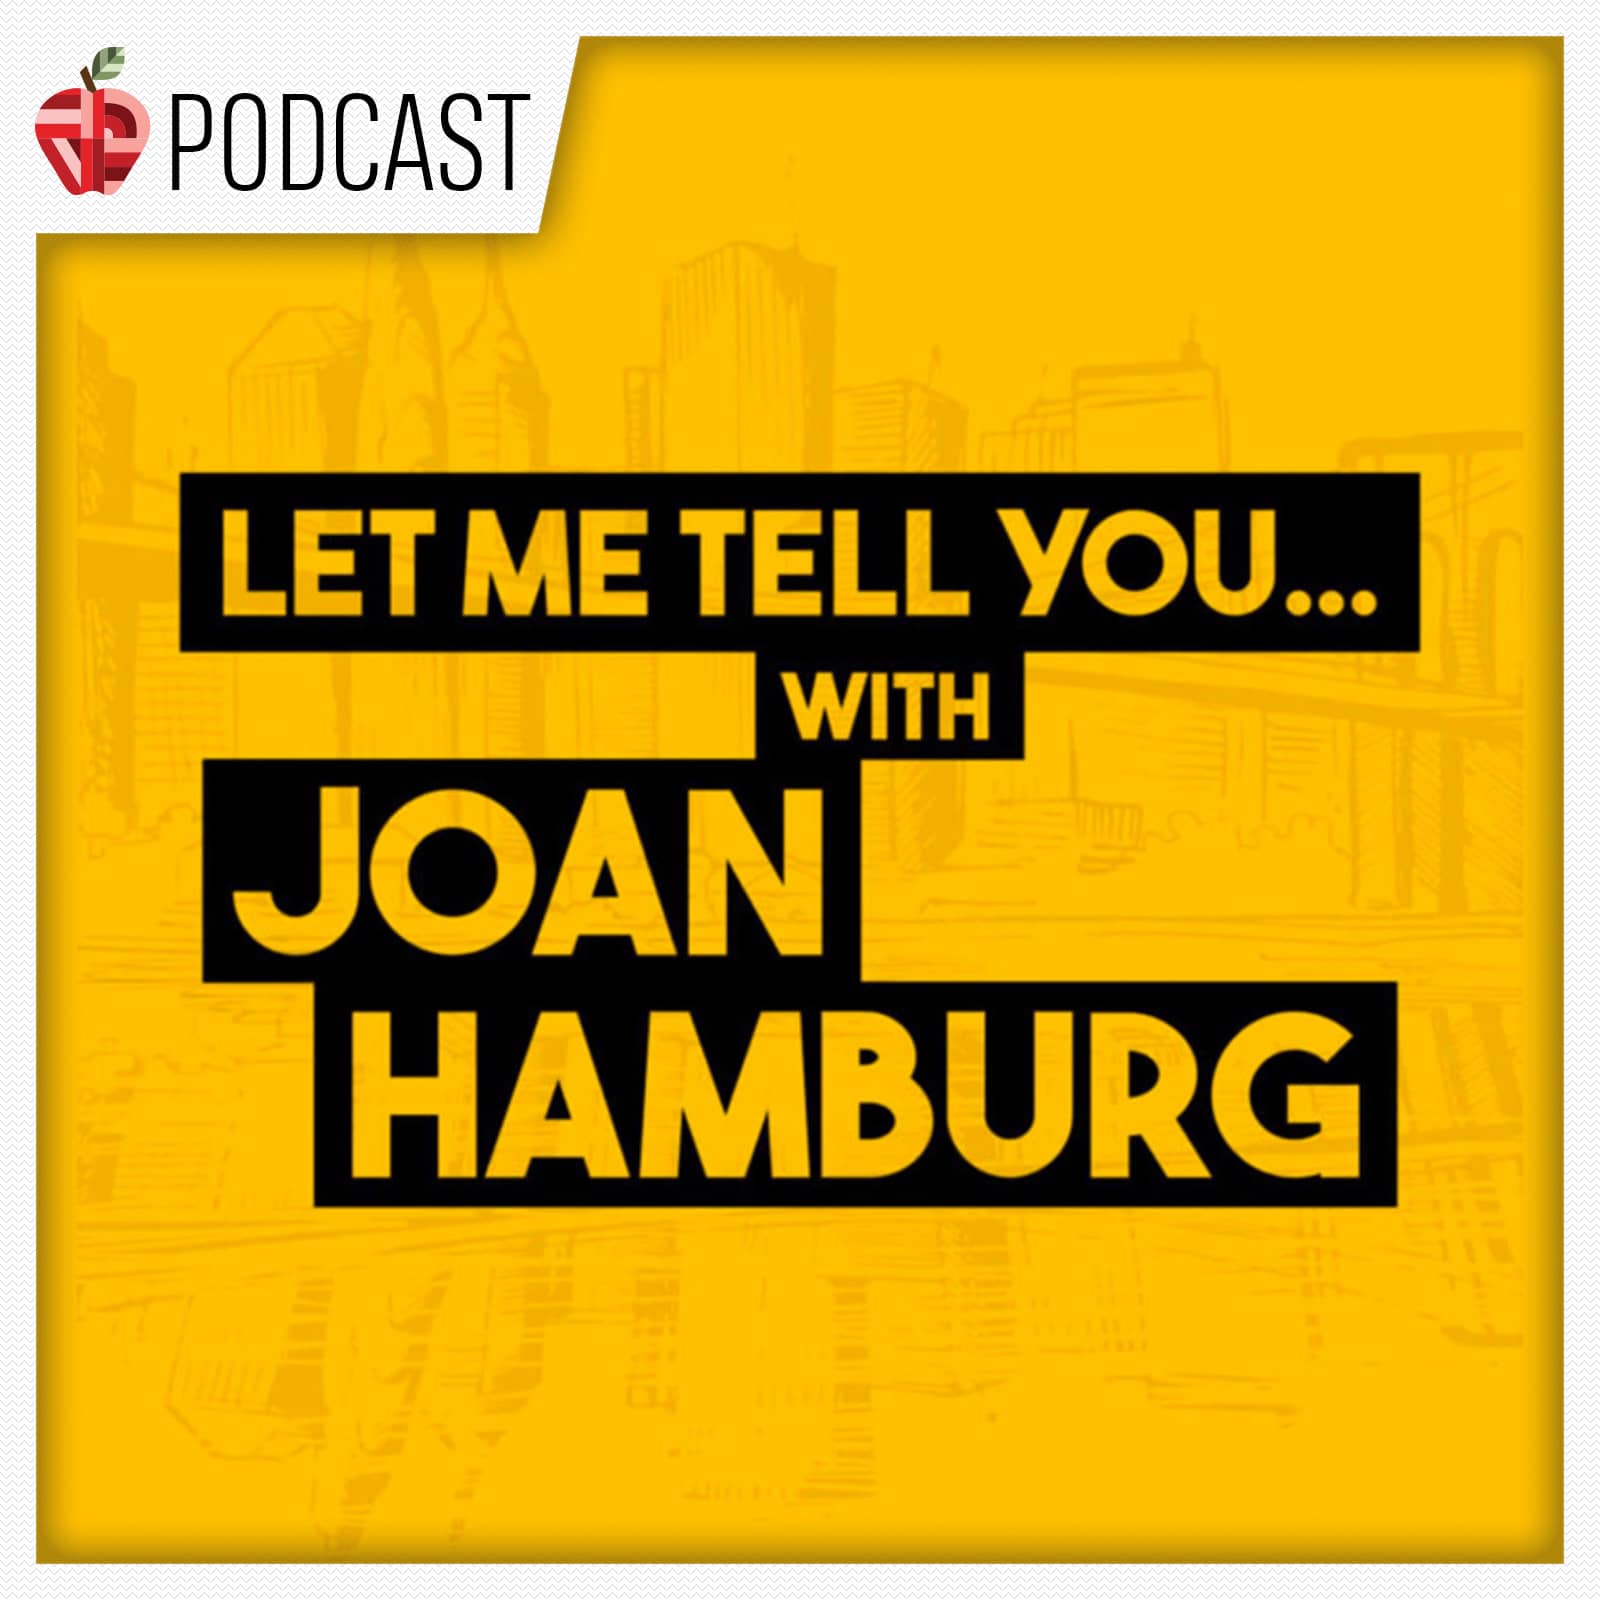 joan-hamburg-let-me-tell-you-podcast-podcast-logo-15